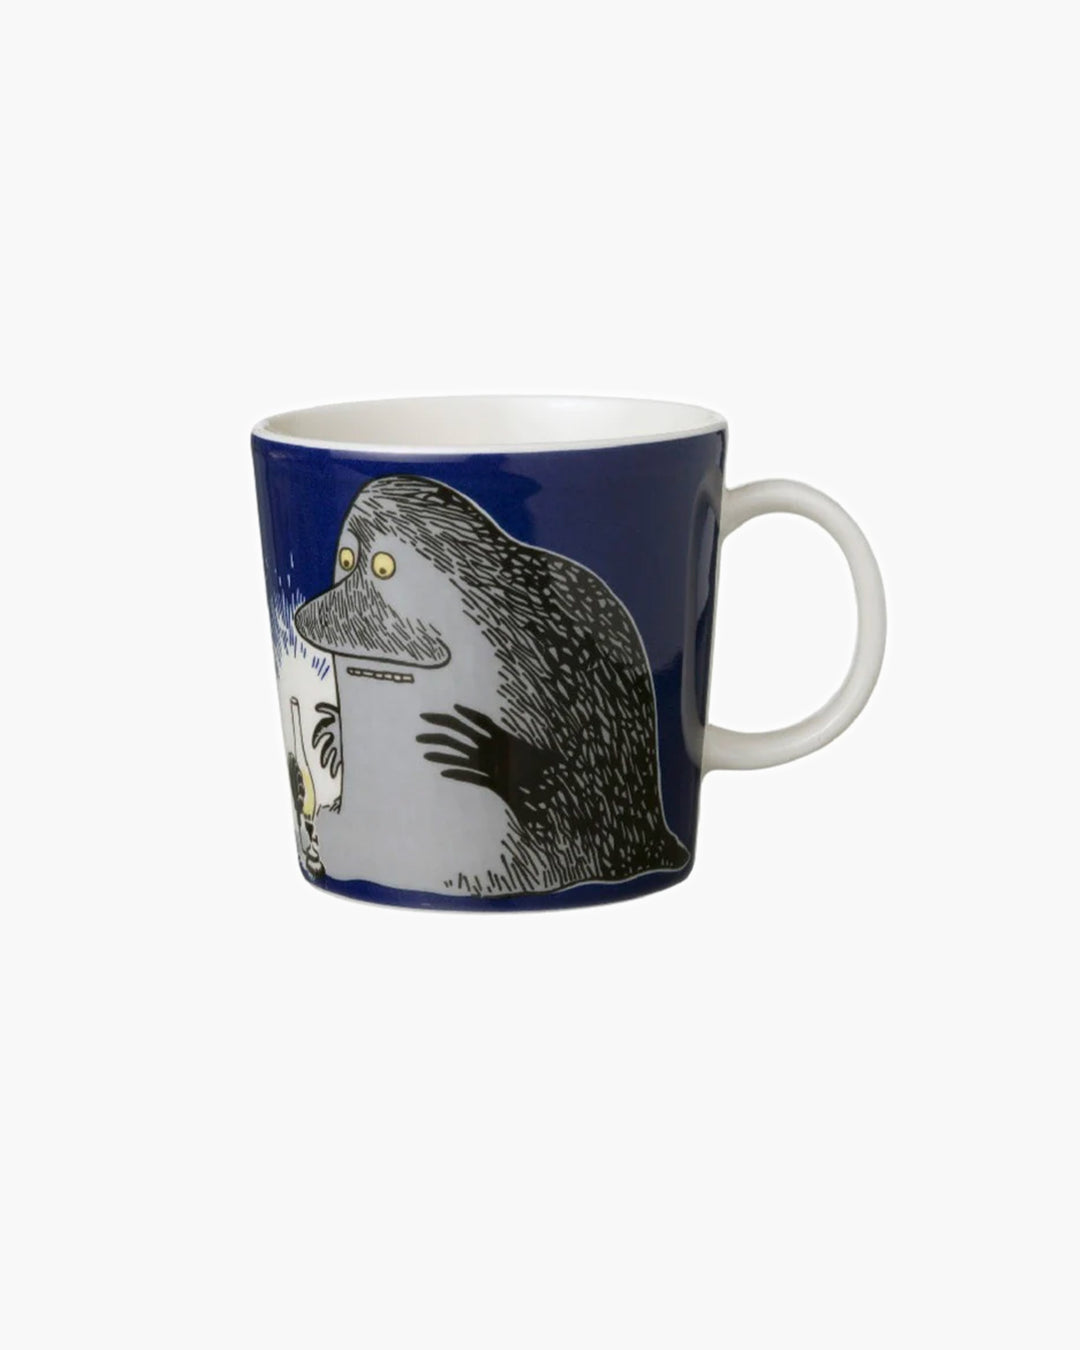 Moomin Mug, The Groke